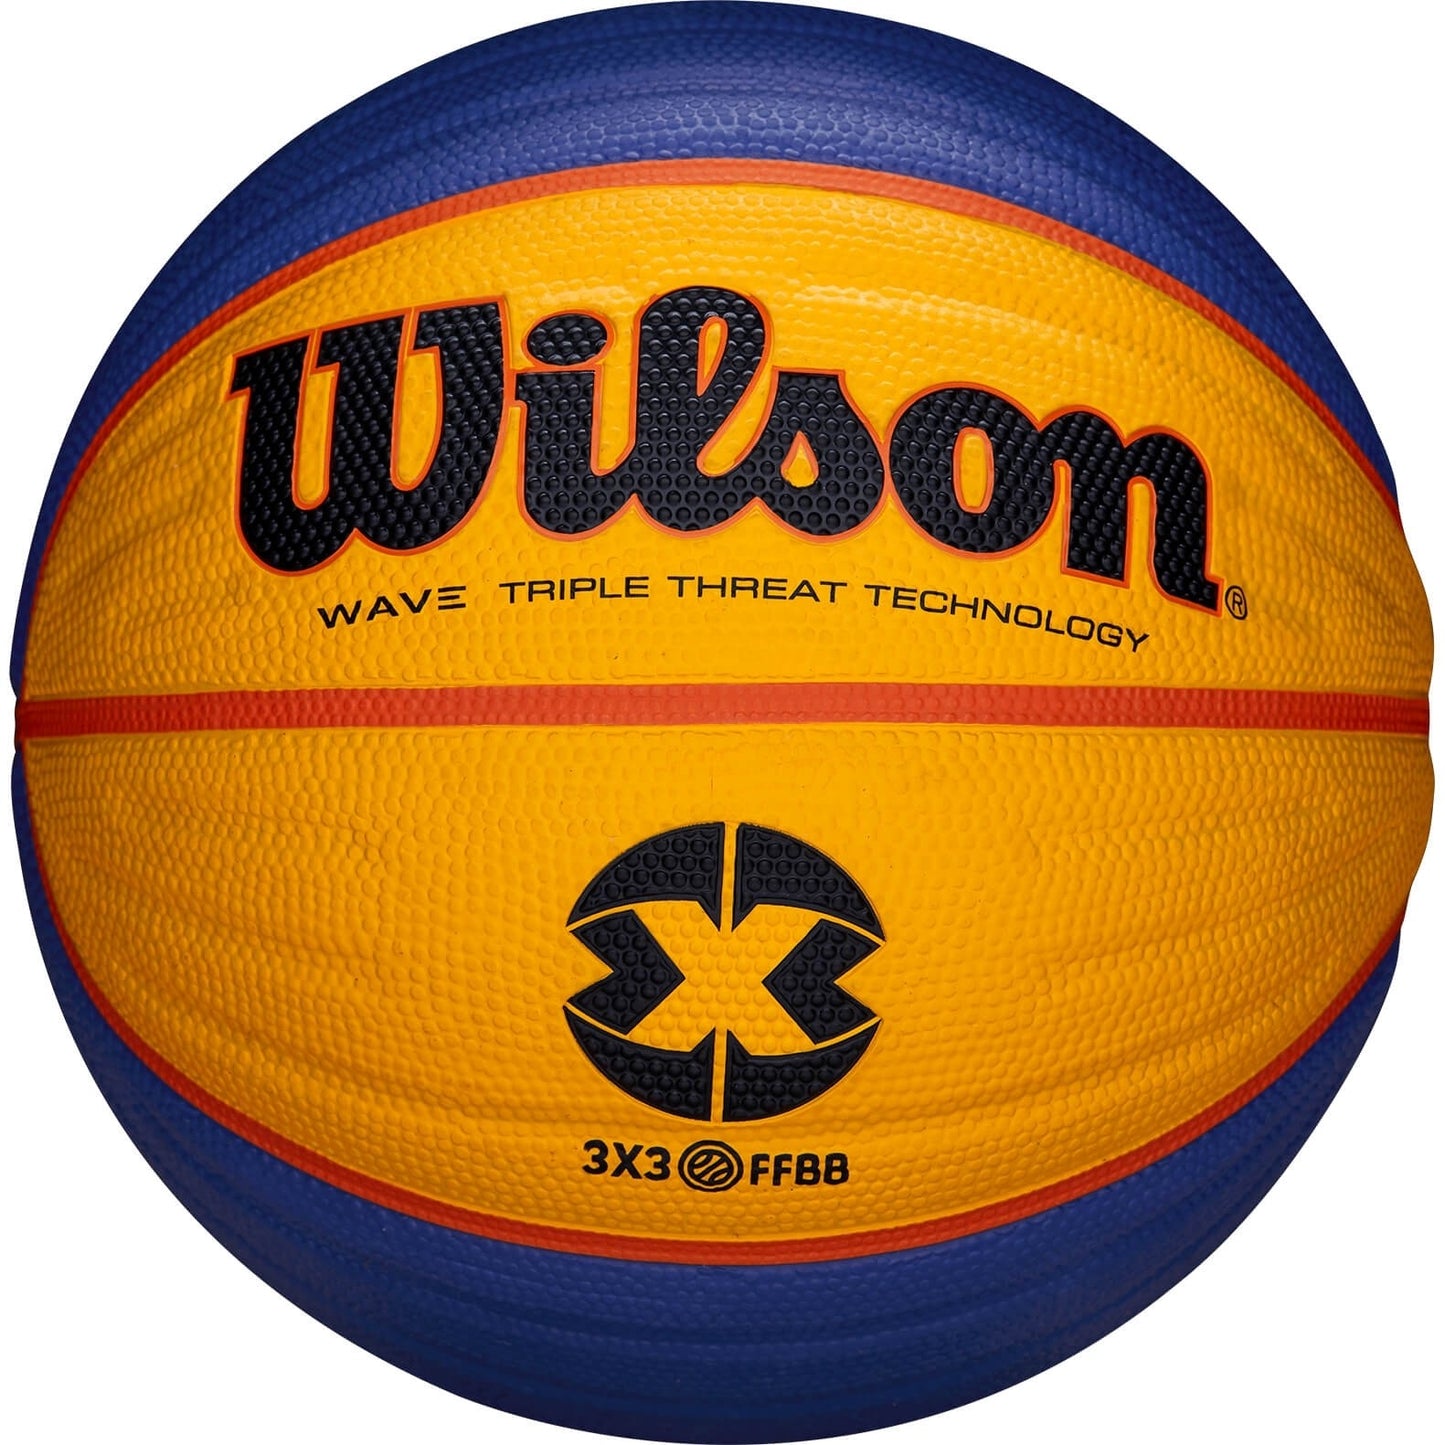 Wilson FIBA 3X3 REPLICA RBR BASKETBALL